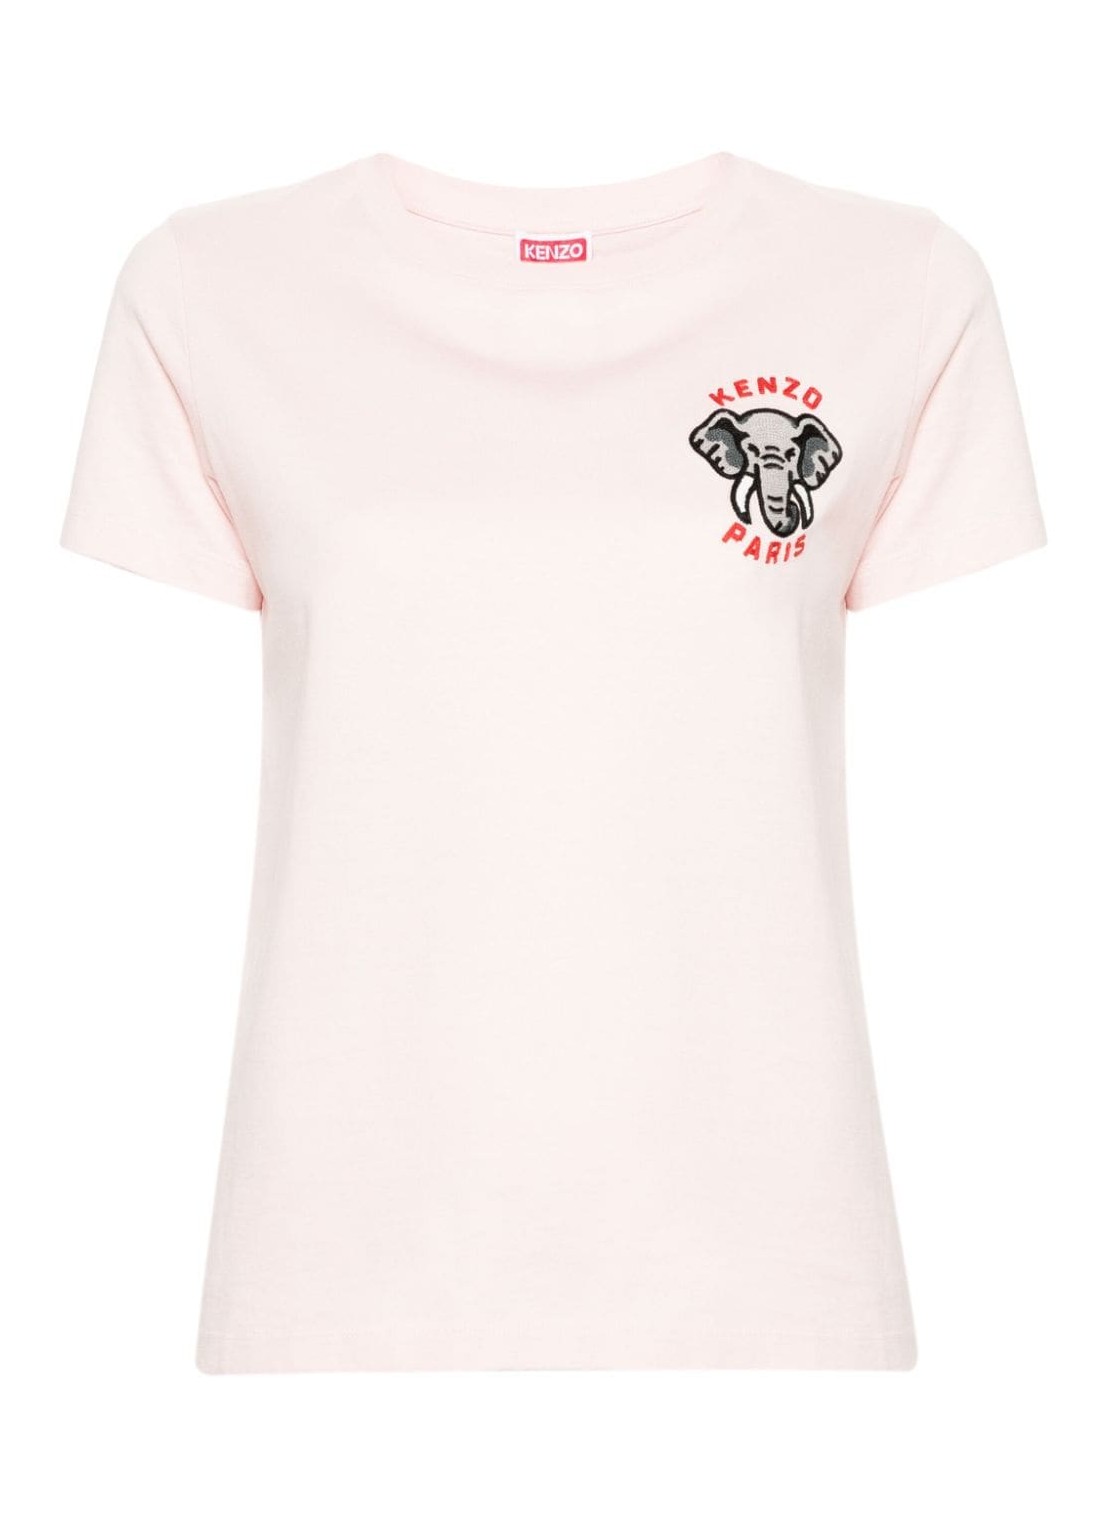 Top kenzo top woman t-shirt fe52ts1134sg 34 talla rosa
 